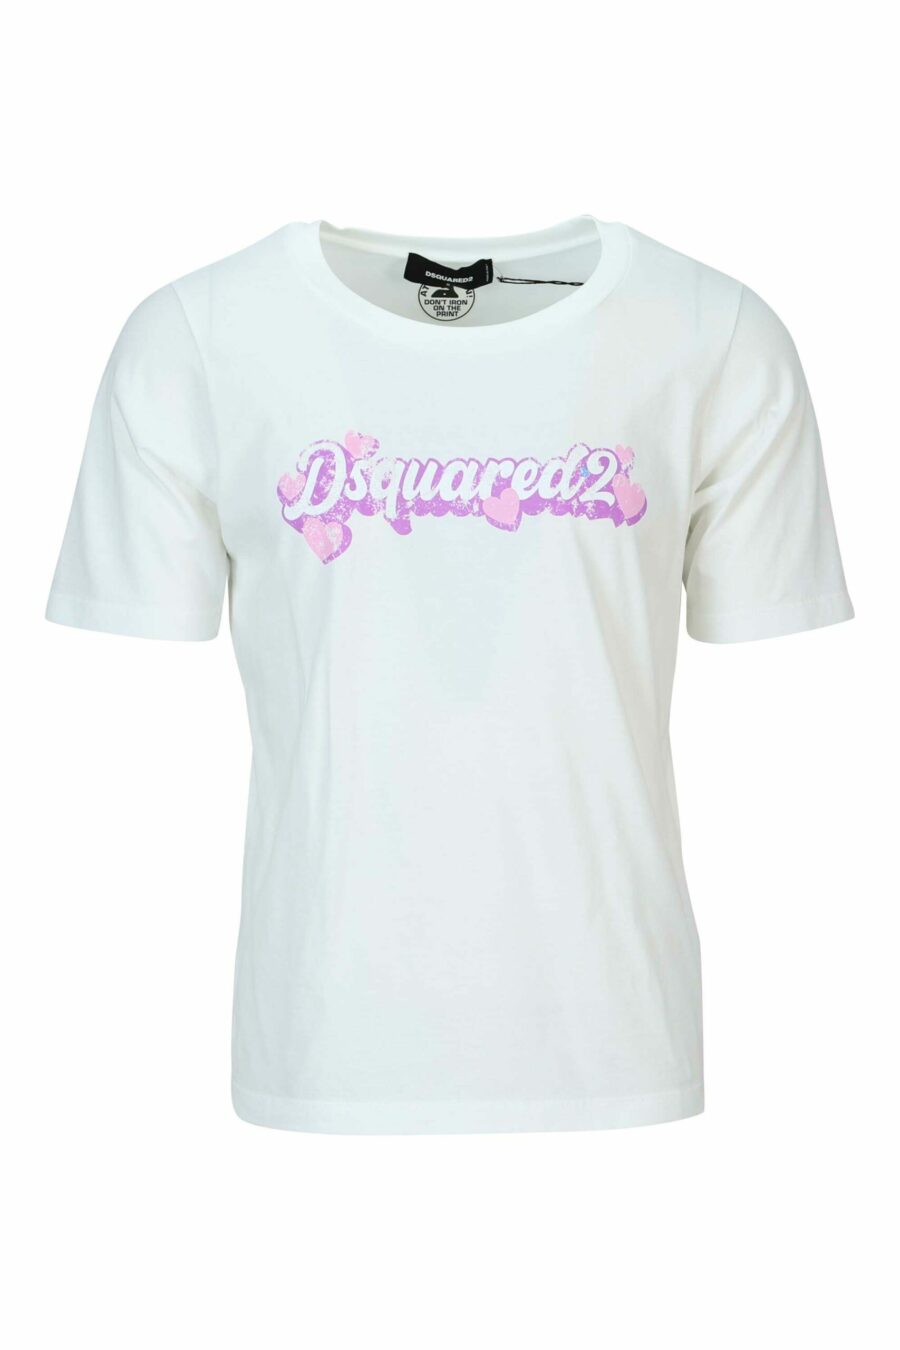 T-shirt branca oversize com maxilogue lilás - 8054148463342 scaled